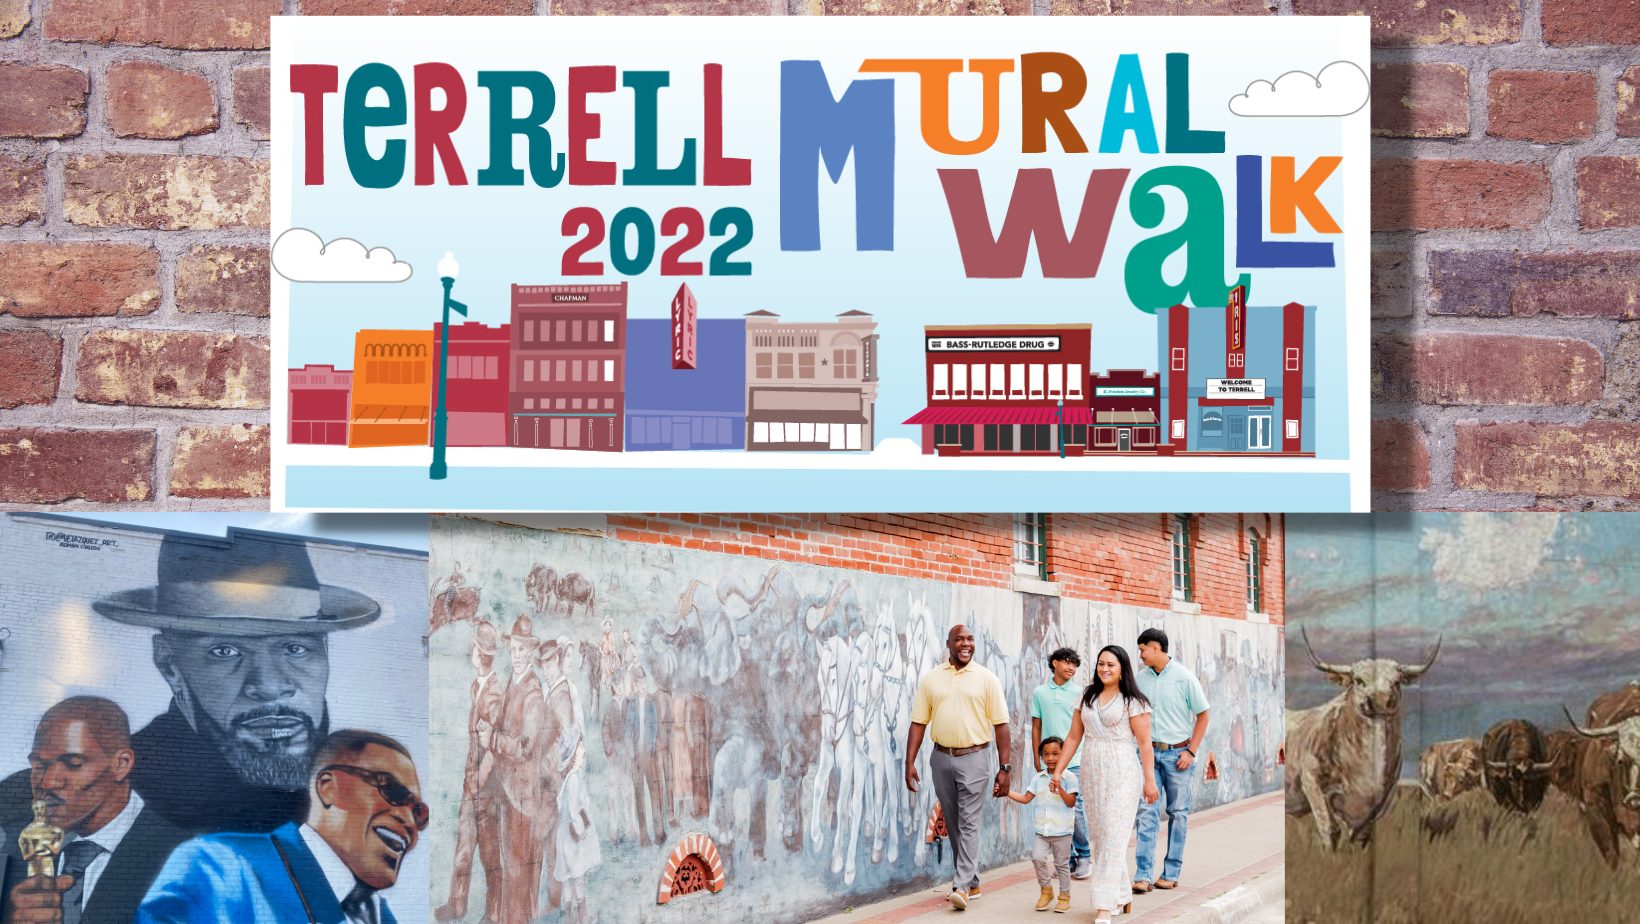 downtown mural walk logo (2)